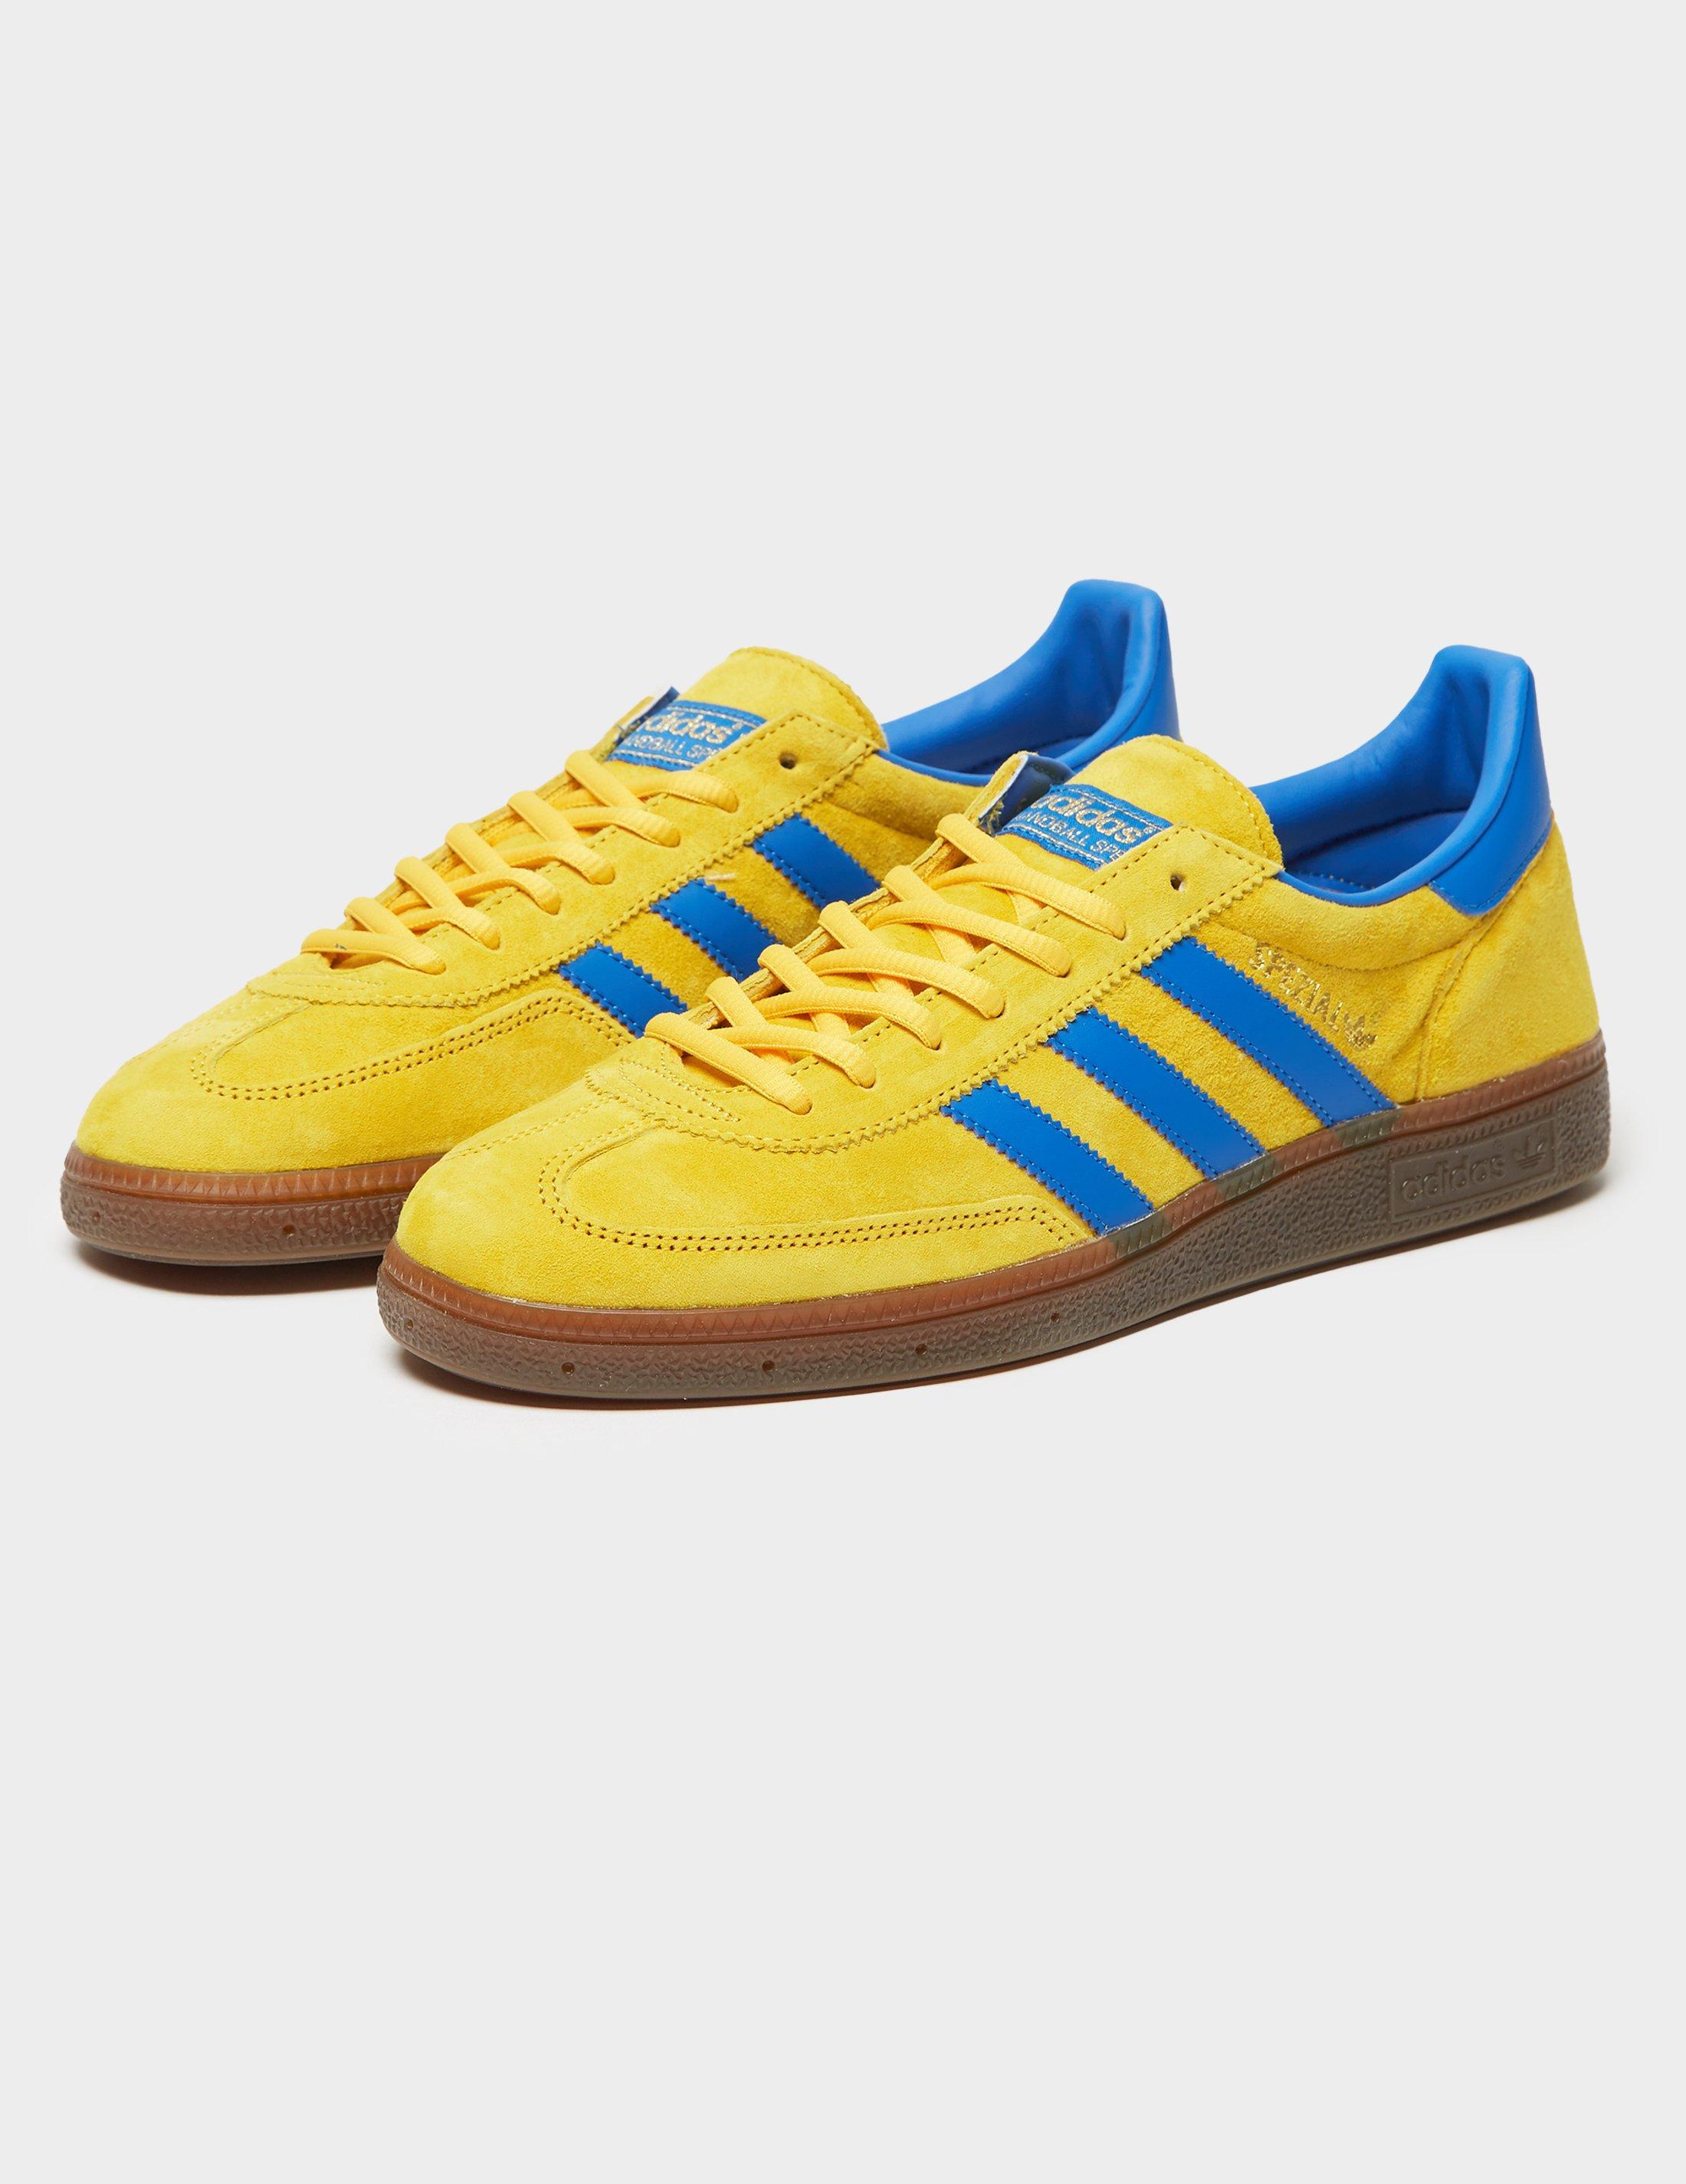 adidas Originals Handball Spezial Yellow/blue for Men | Lyst